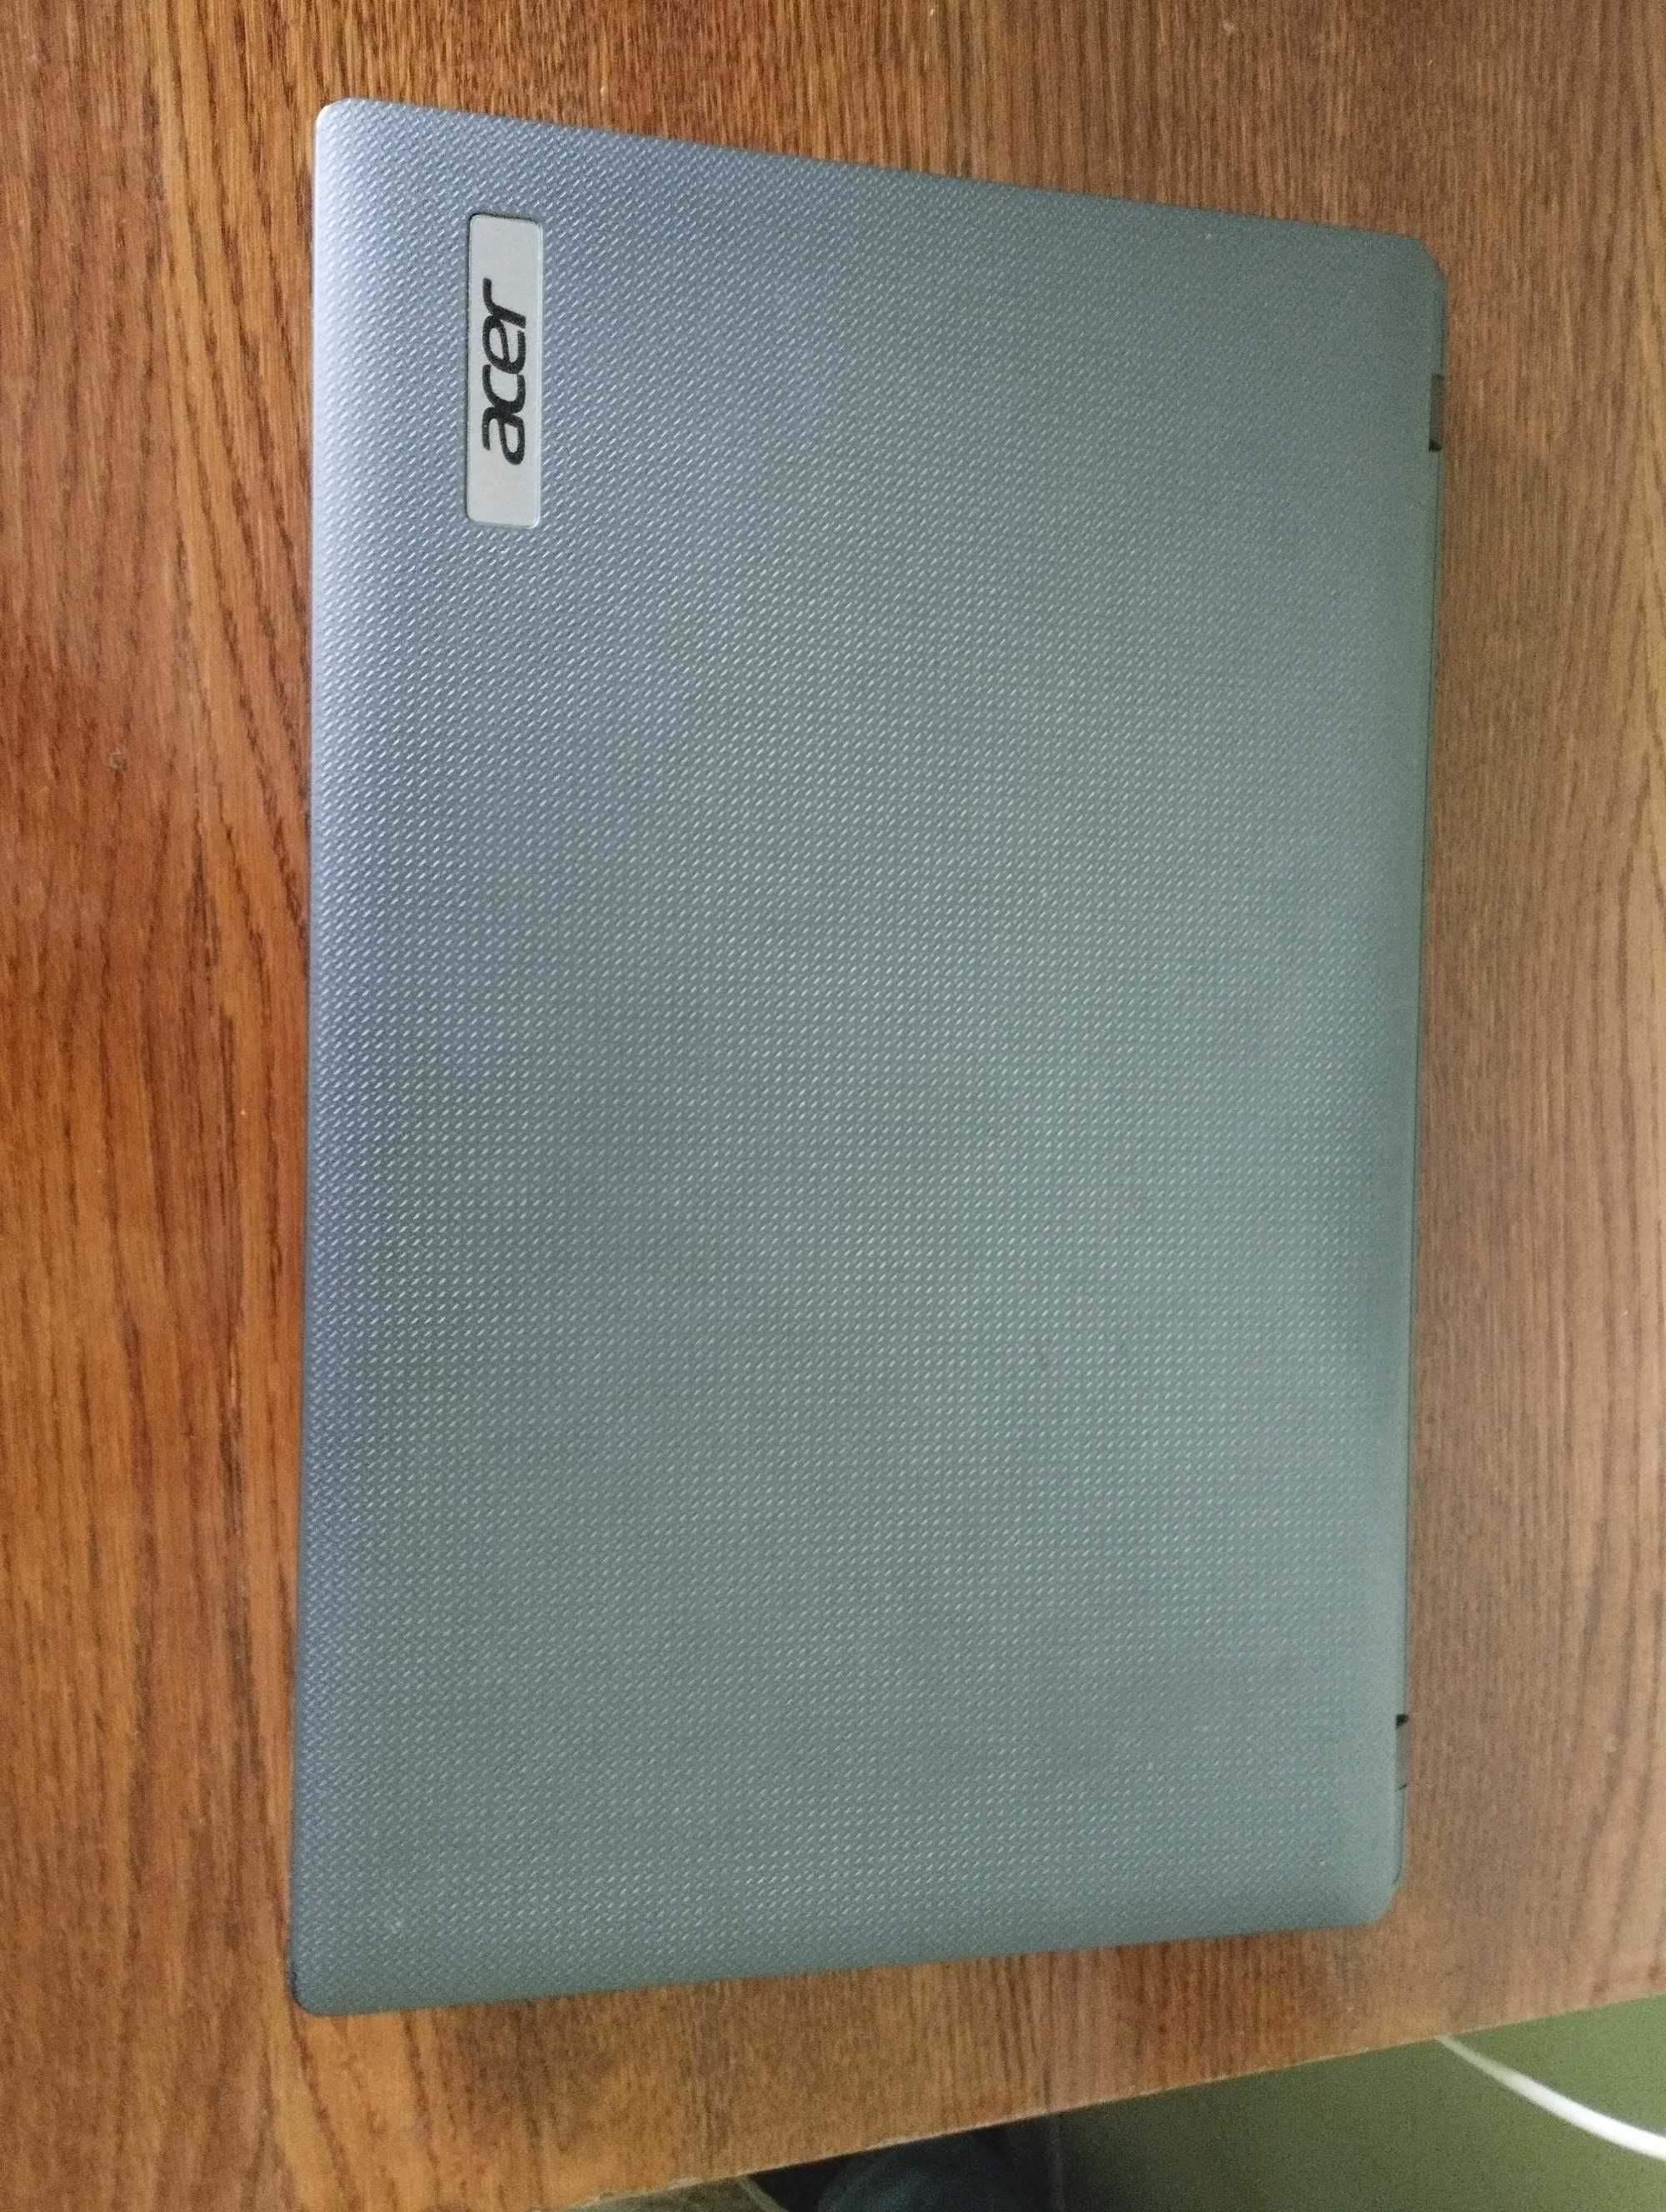 Продам ноутбук acer aspire 5742z (БЕЗ диску)